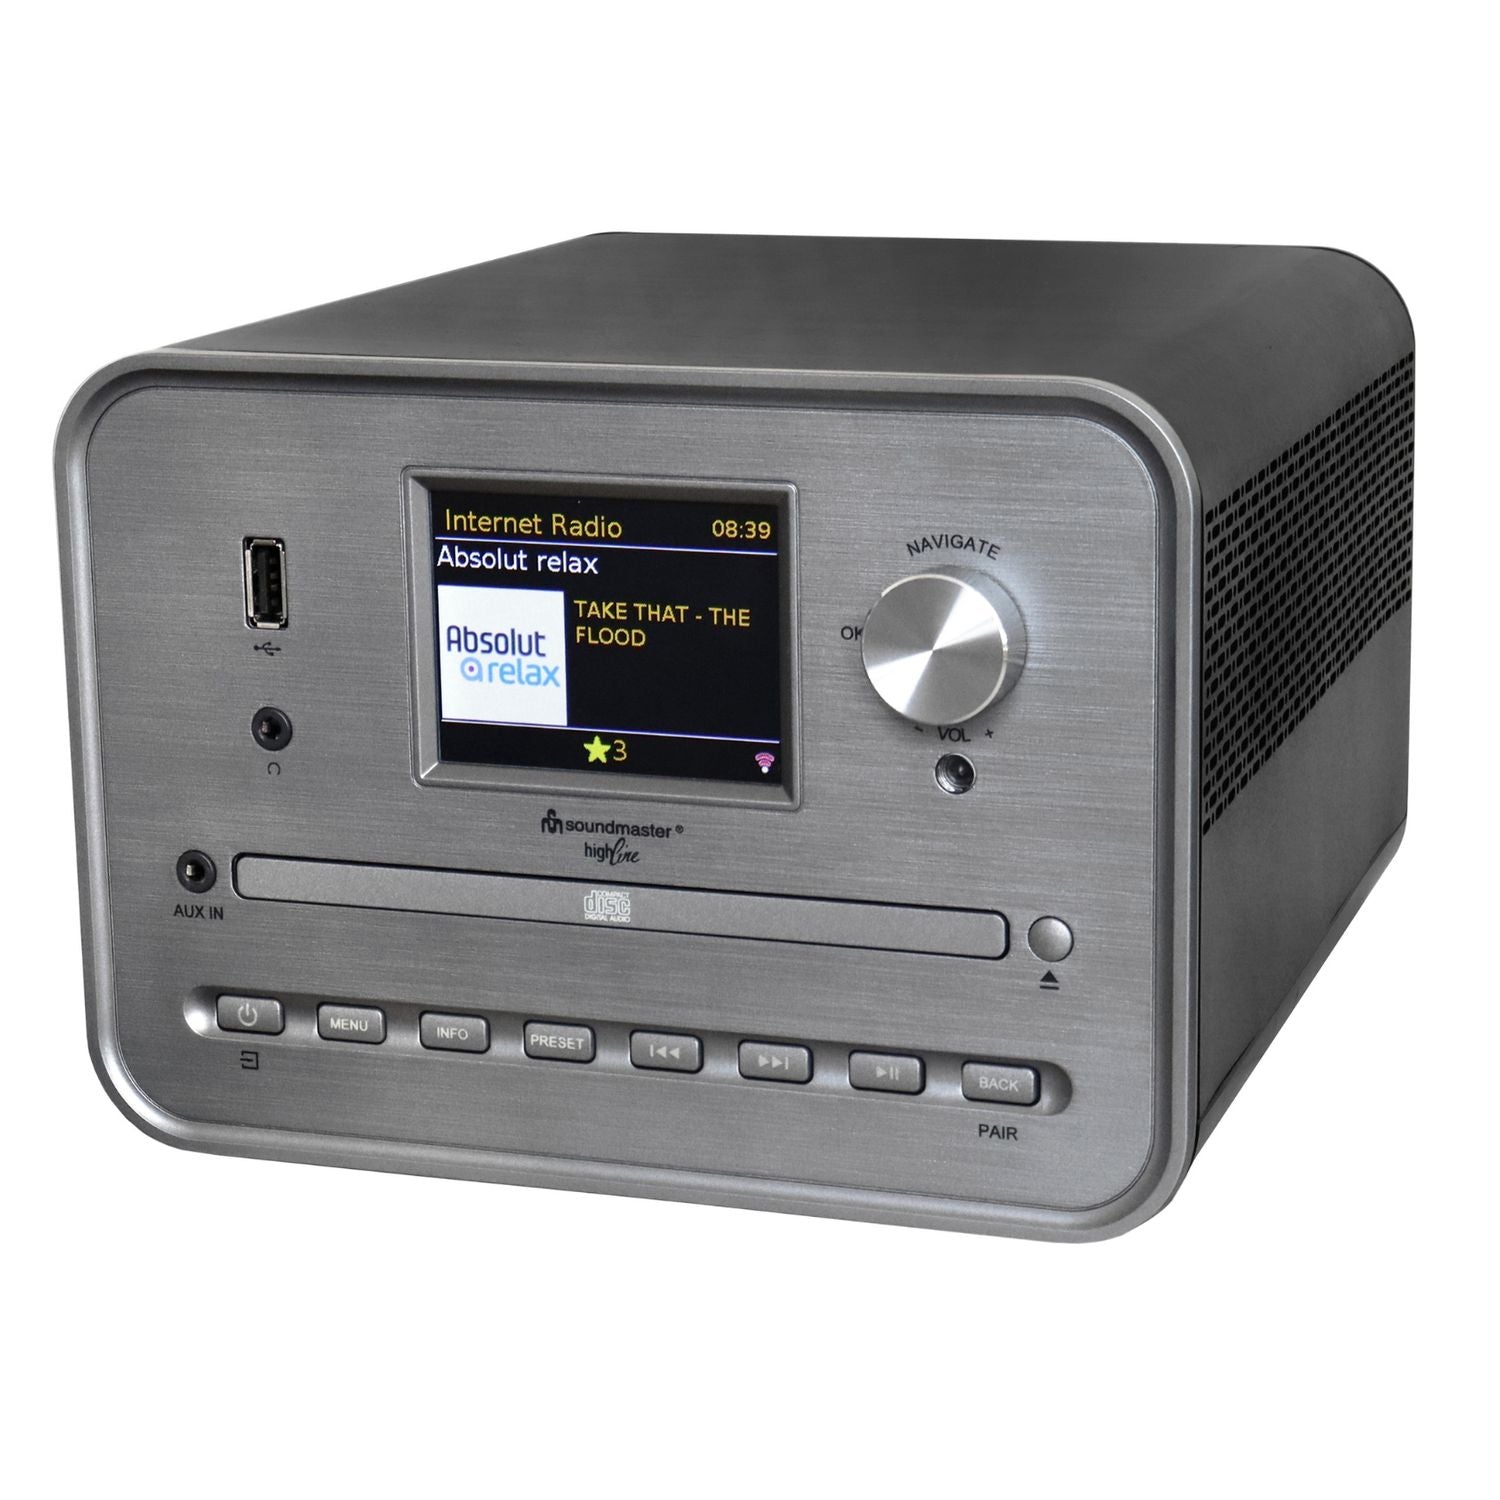 Soundmaster HighLine ICD1050SW Internetradio Kompaktanlage CD-Player Stereo WLAN 2,4/5 GHz DAB+ Bluetooth USB MP3 APP Farbdisplay Wecker